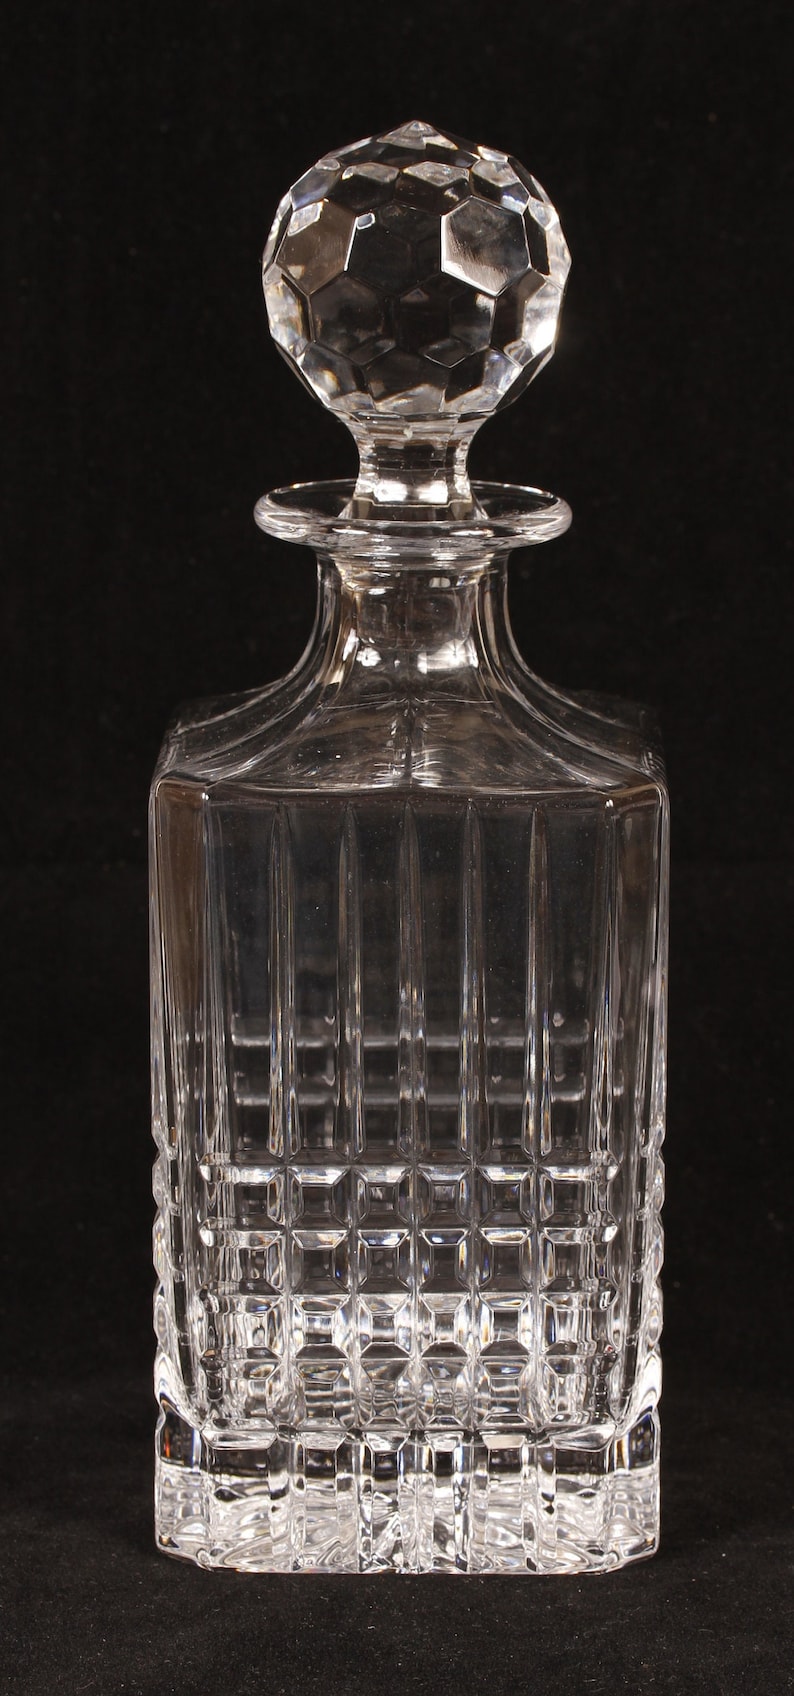 Tiffany & Co Crystal Pattern Plaid Decanter Vintage Ceramic Collectible Drinkware Barware Entertaining image 4